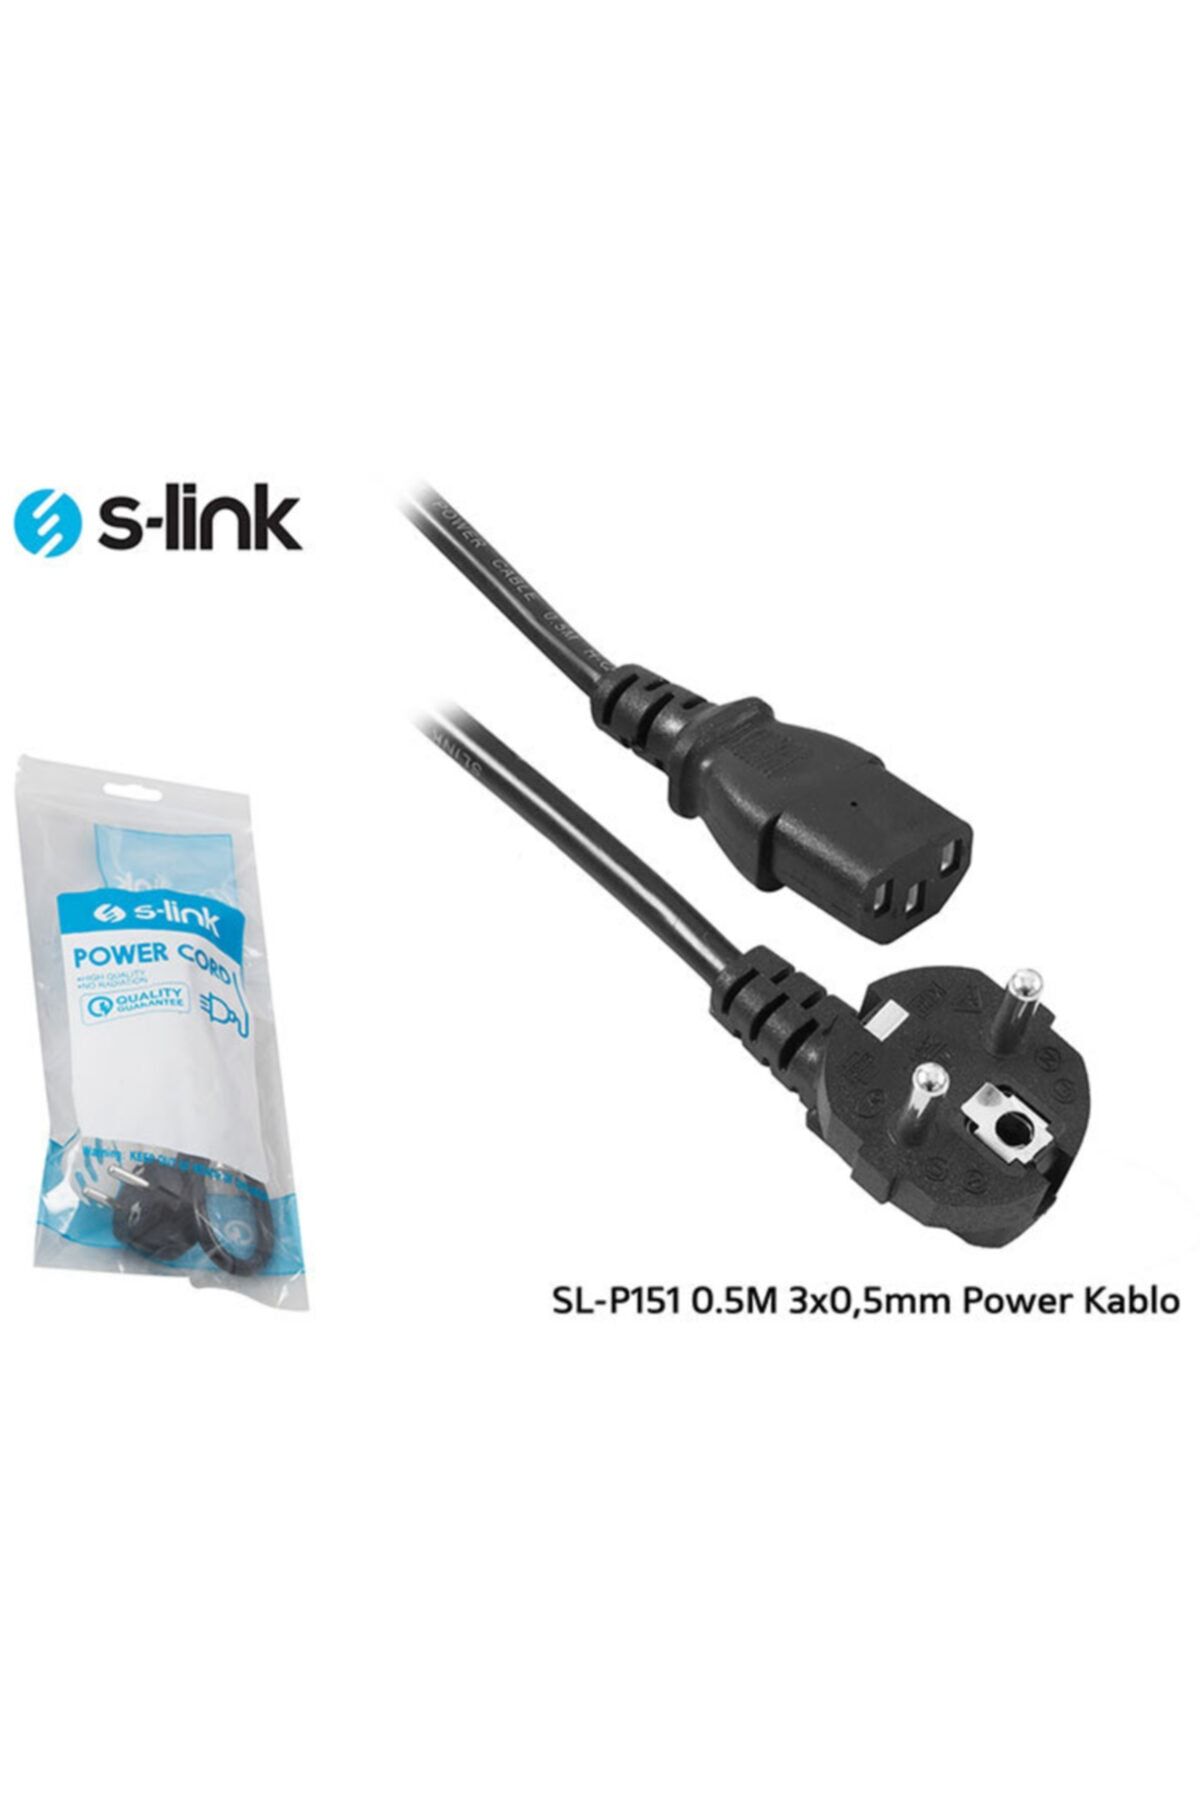 S-Link Sl-p151 0.5m 3x0,5mm Power Kablo